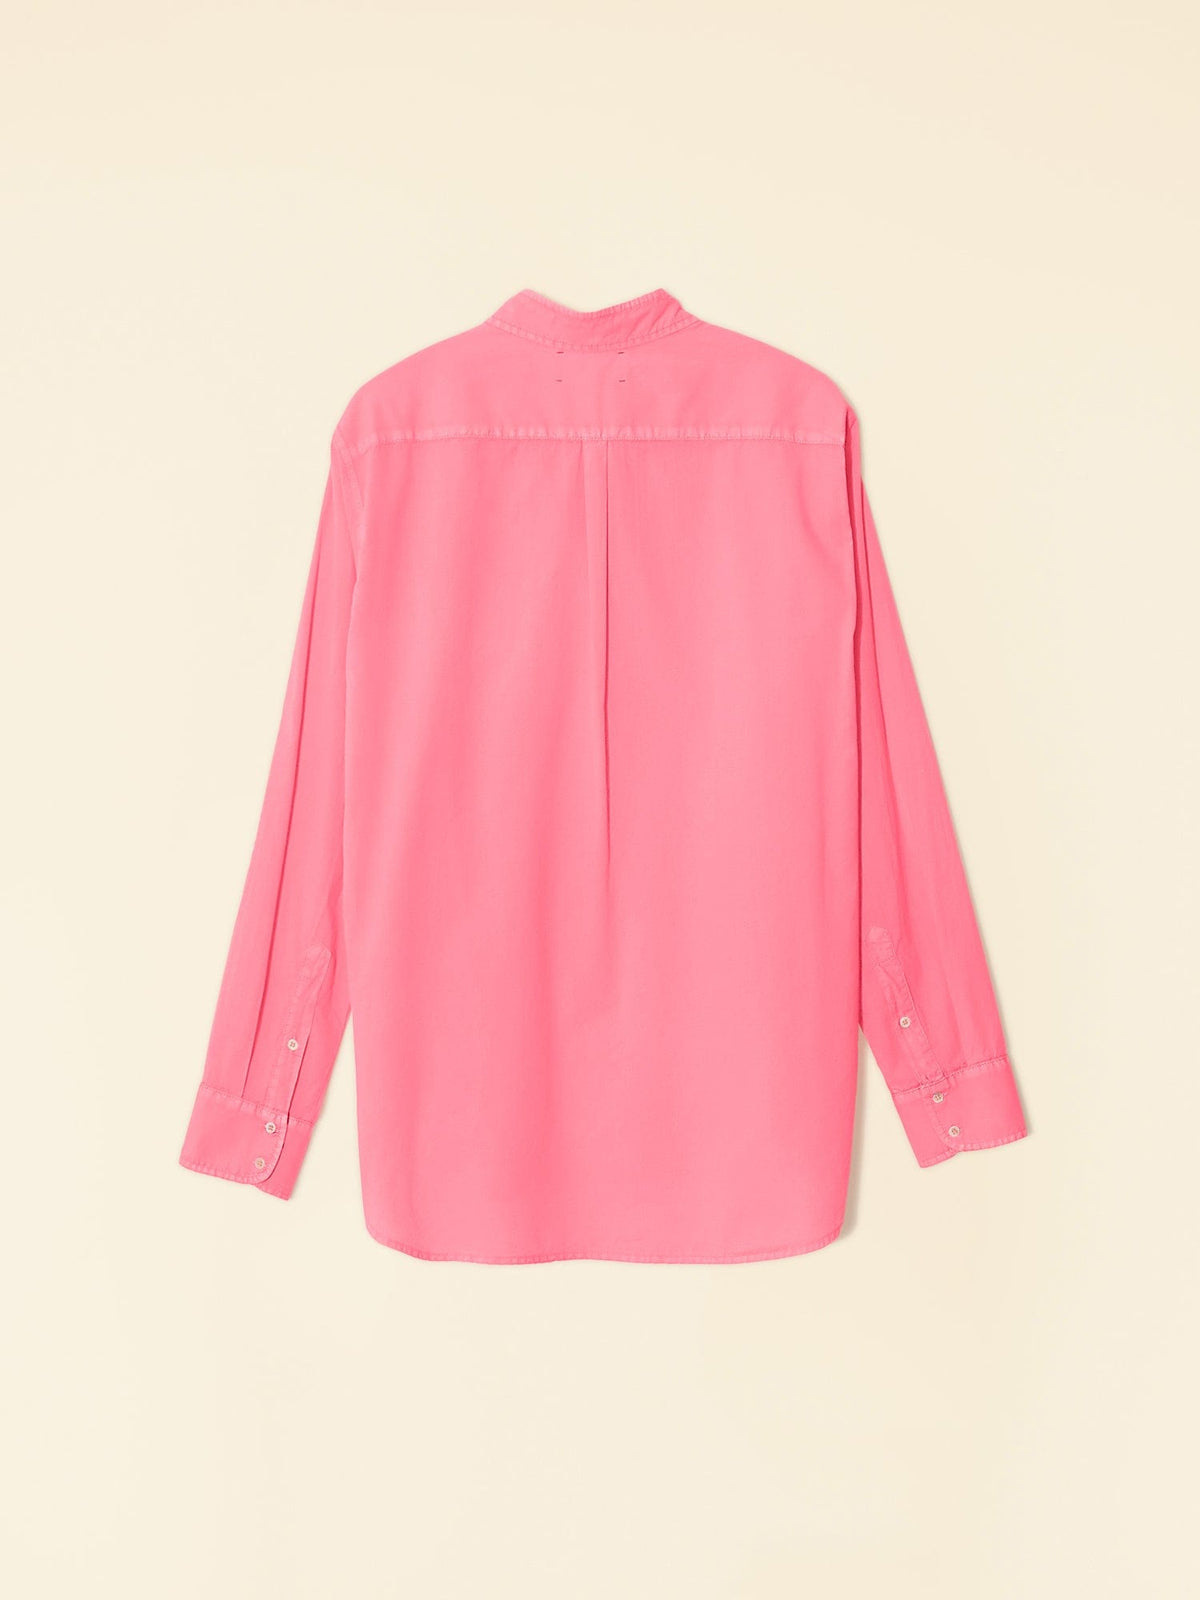 Beau Shirt - Neon Pink